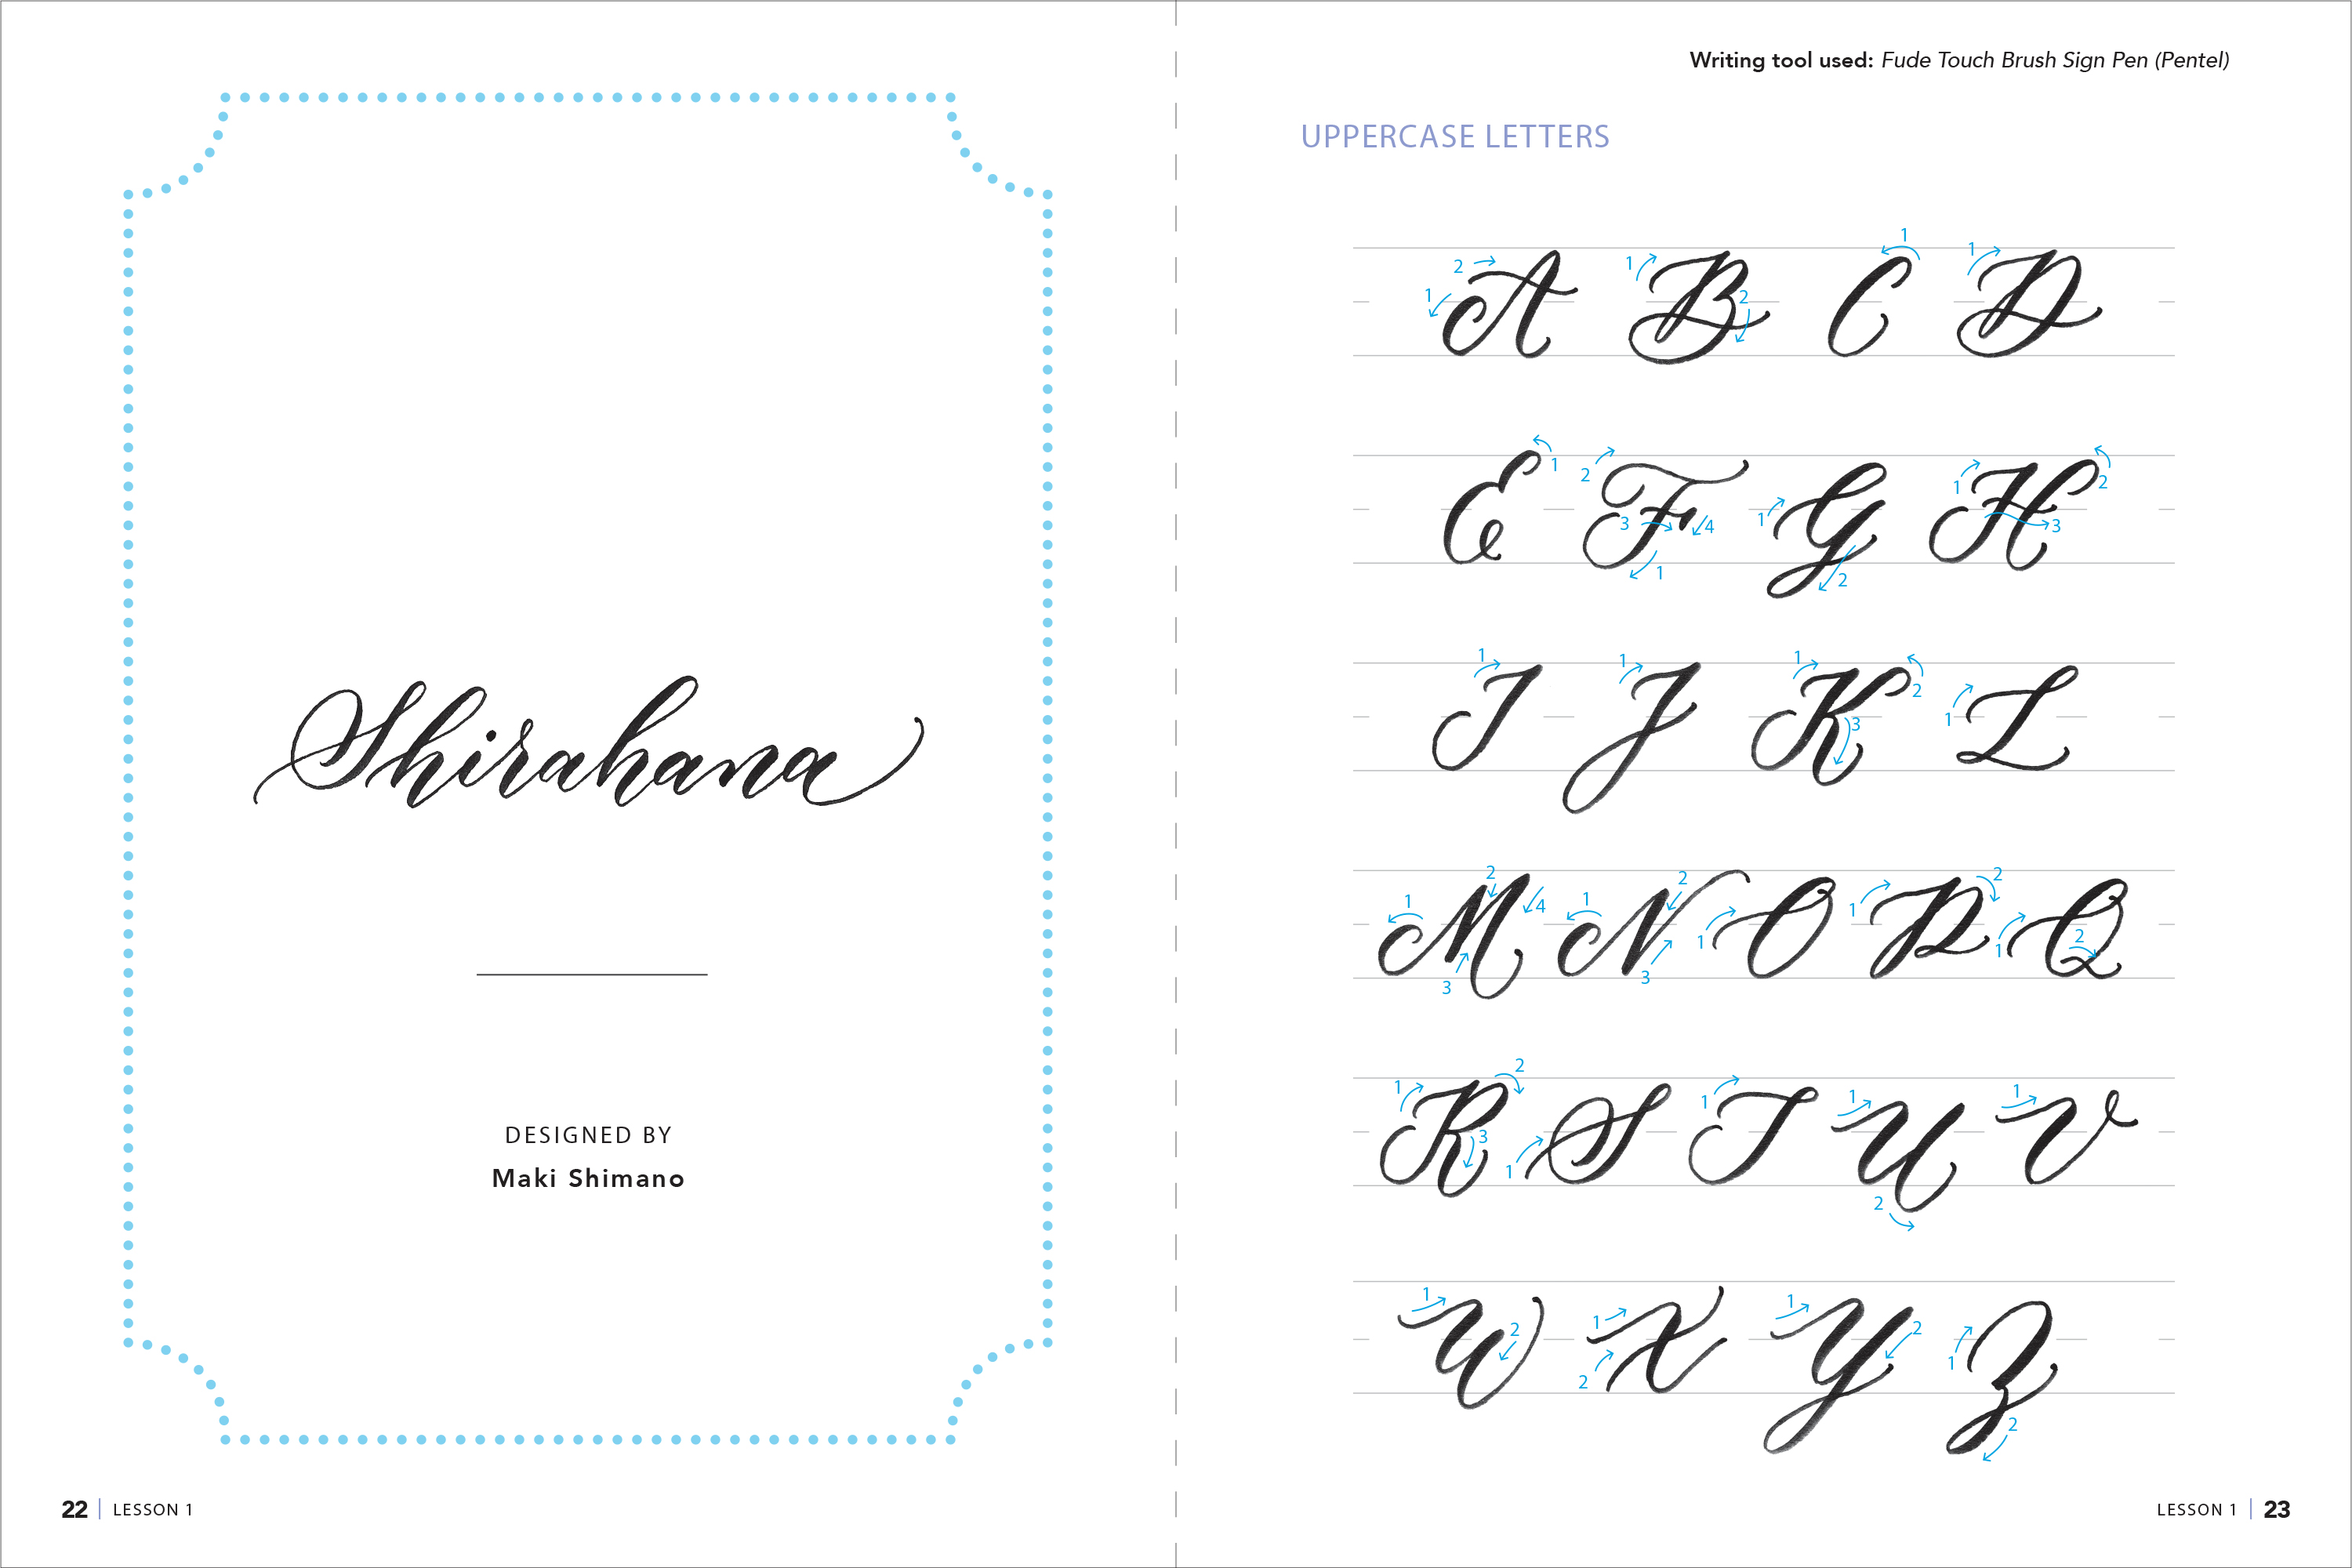 A Beginner's Guide to Modern Calligraphy & Brush Pen Lettering